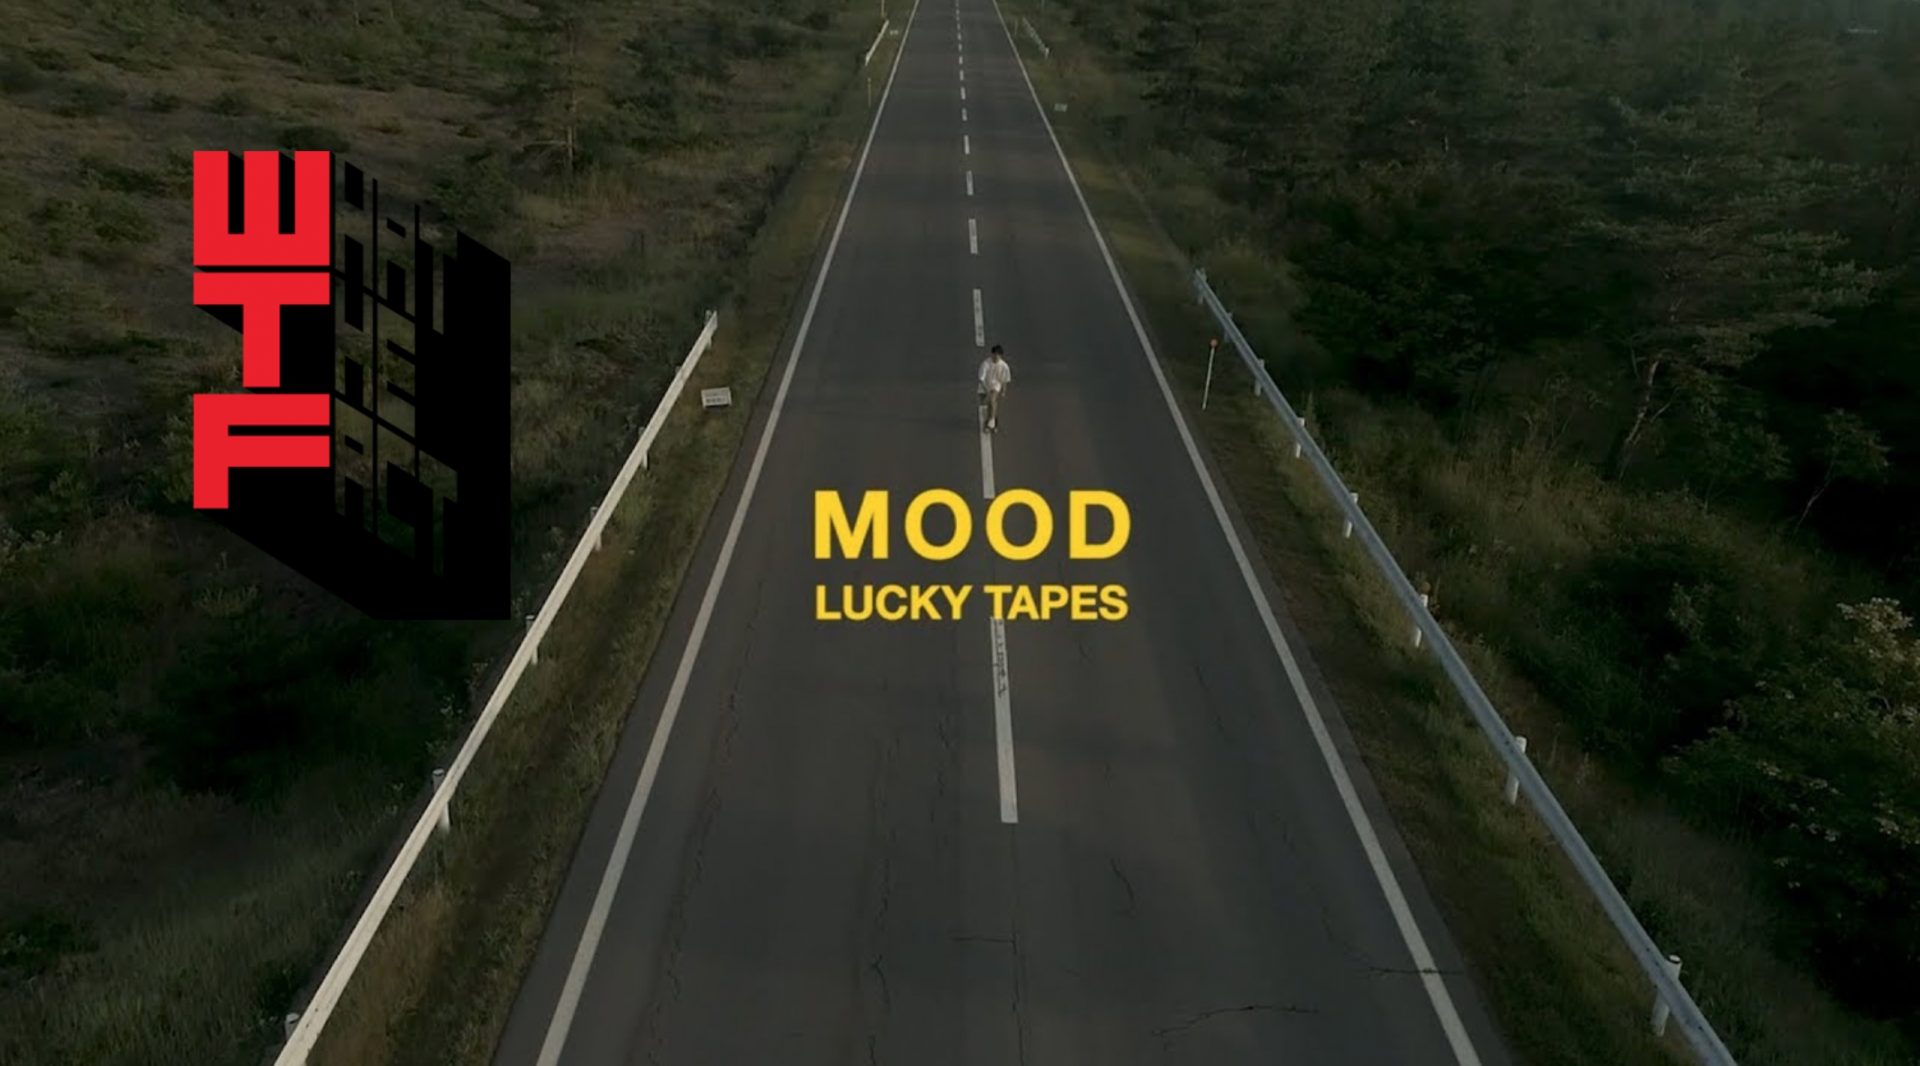 Lucky Tapes “MOOD” บทเพลงที่จะเปลี่ยนมู้ดของคุณให้สดใสยิ้มแย้มไปตลอดวัน